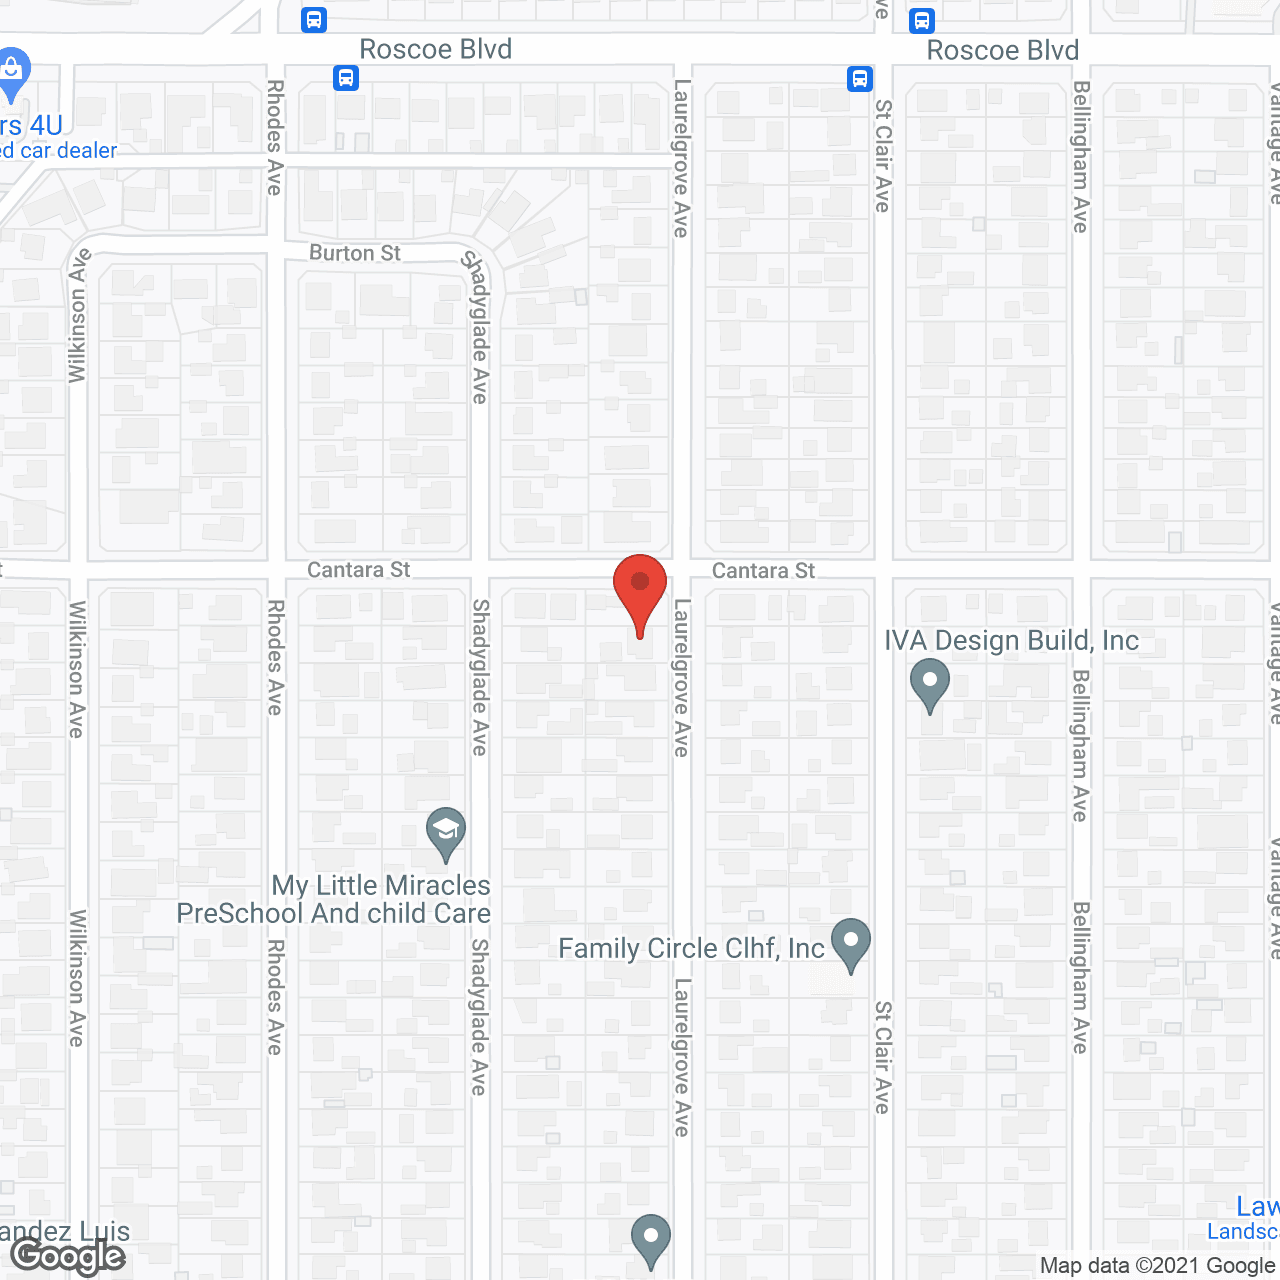 Austin Manor-CLOSED in google map